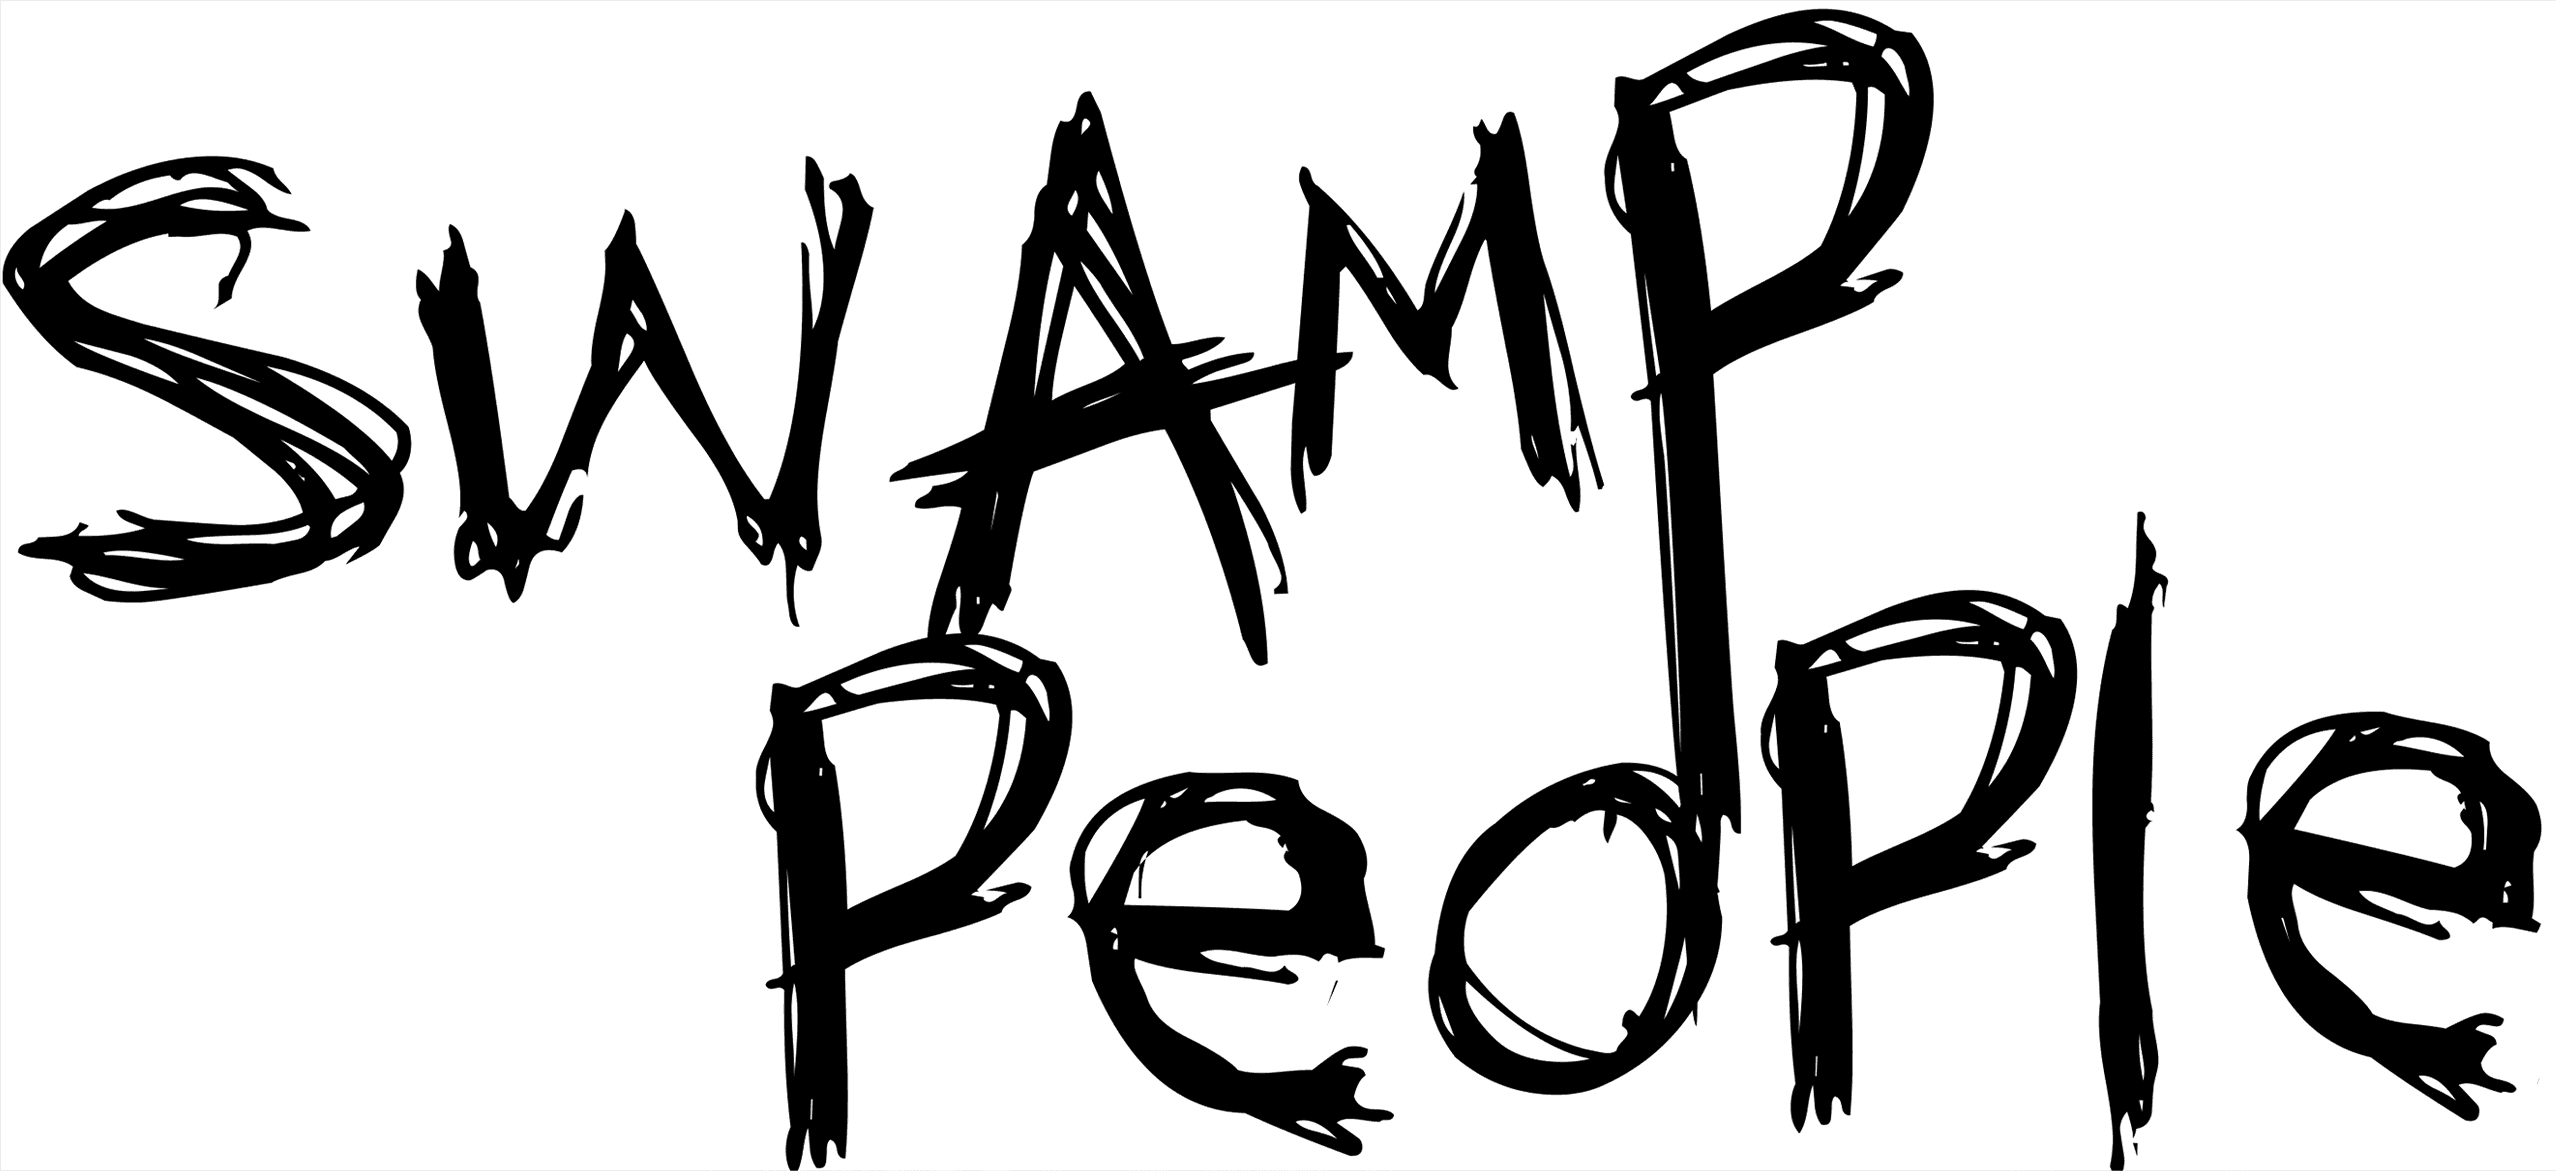 Swamp People logo